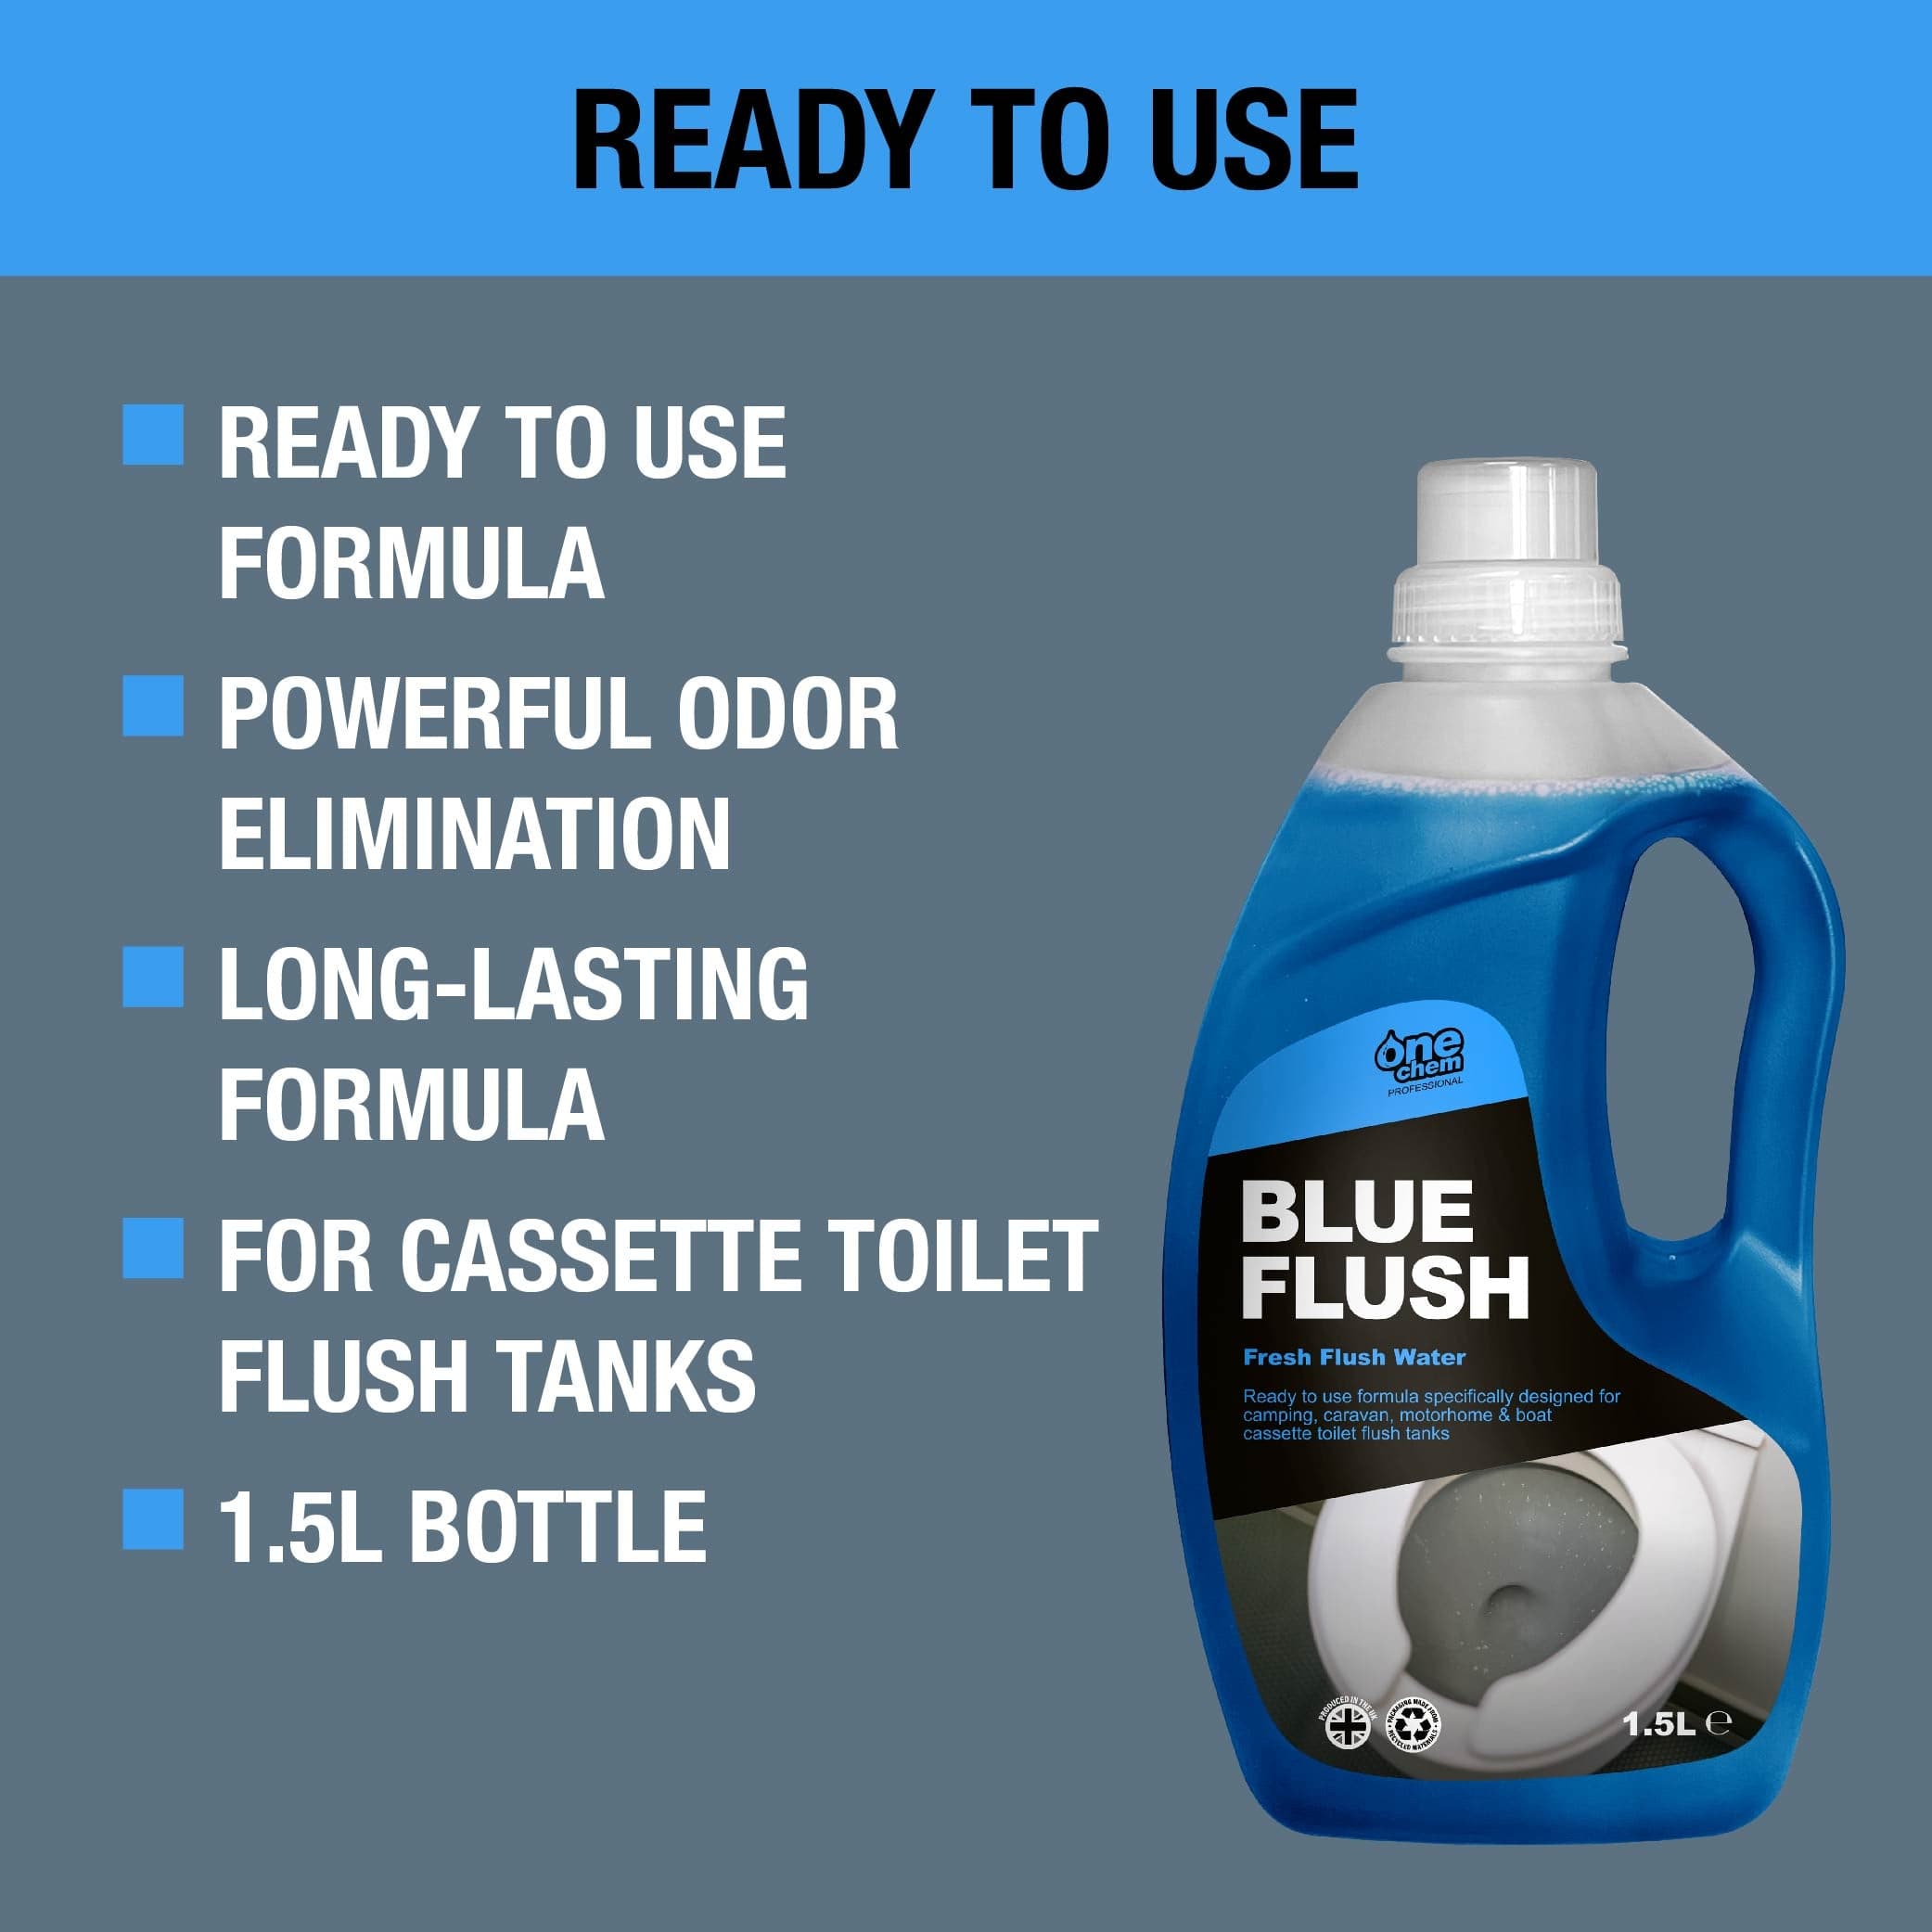 One Chem Professional Toilet Cleaner Blue Flush Fluid, 2 x 1.5 Litre